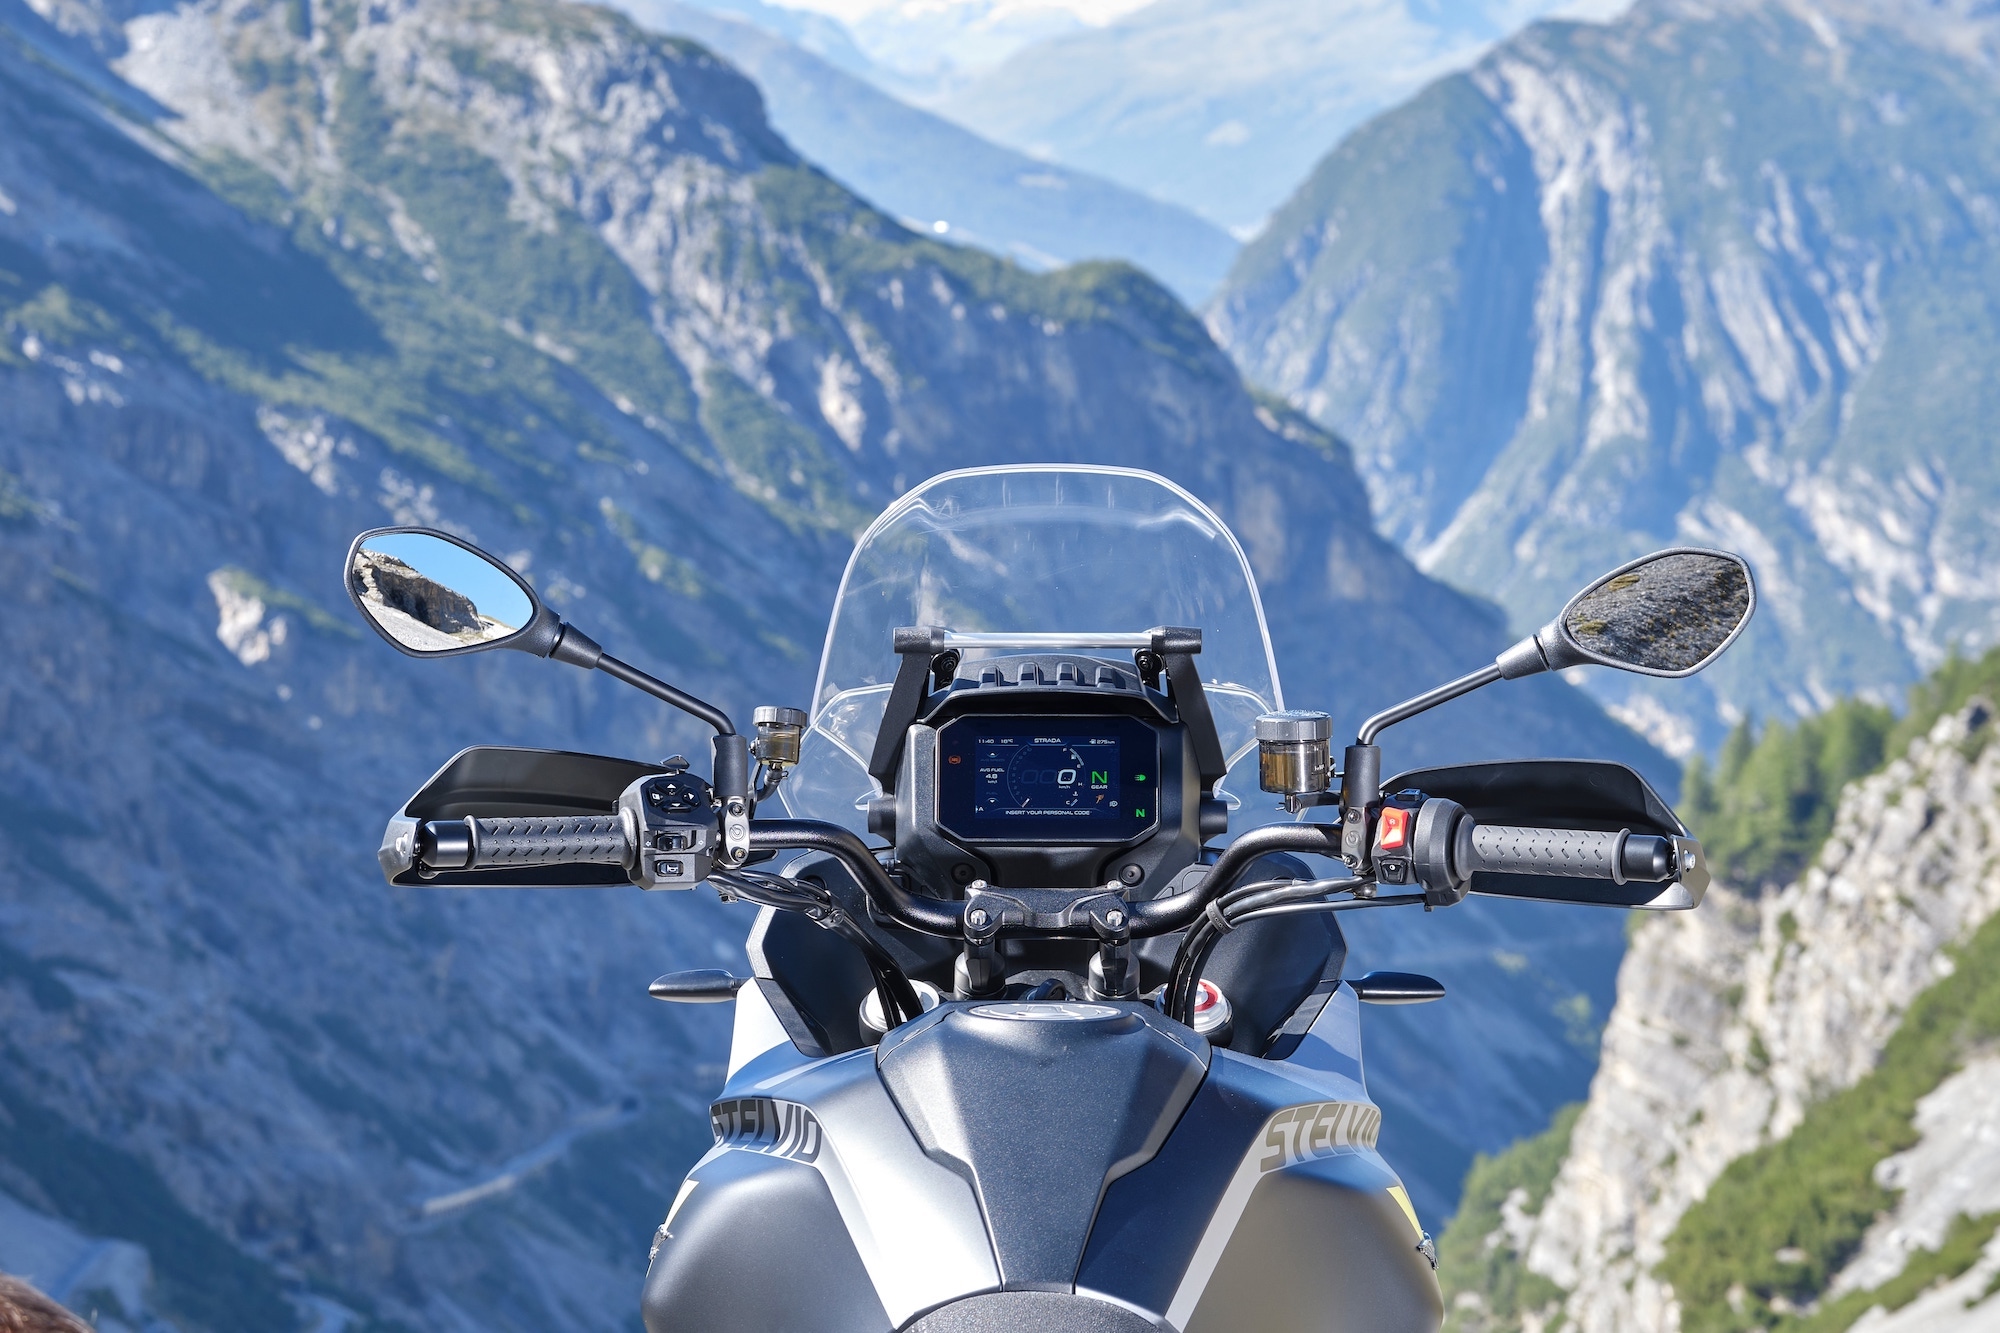 A view of Moto Guzzi's new Stelvio. All media provided by Moto Guzzi.